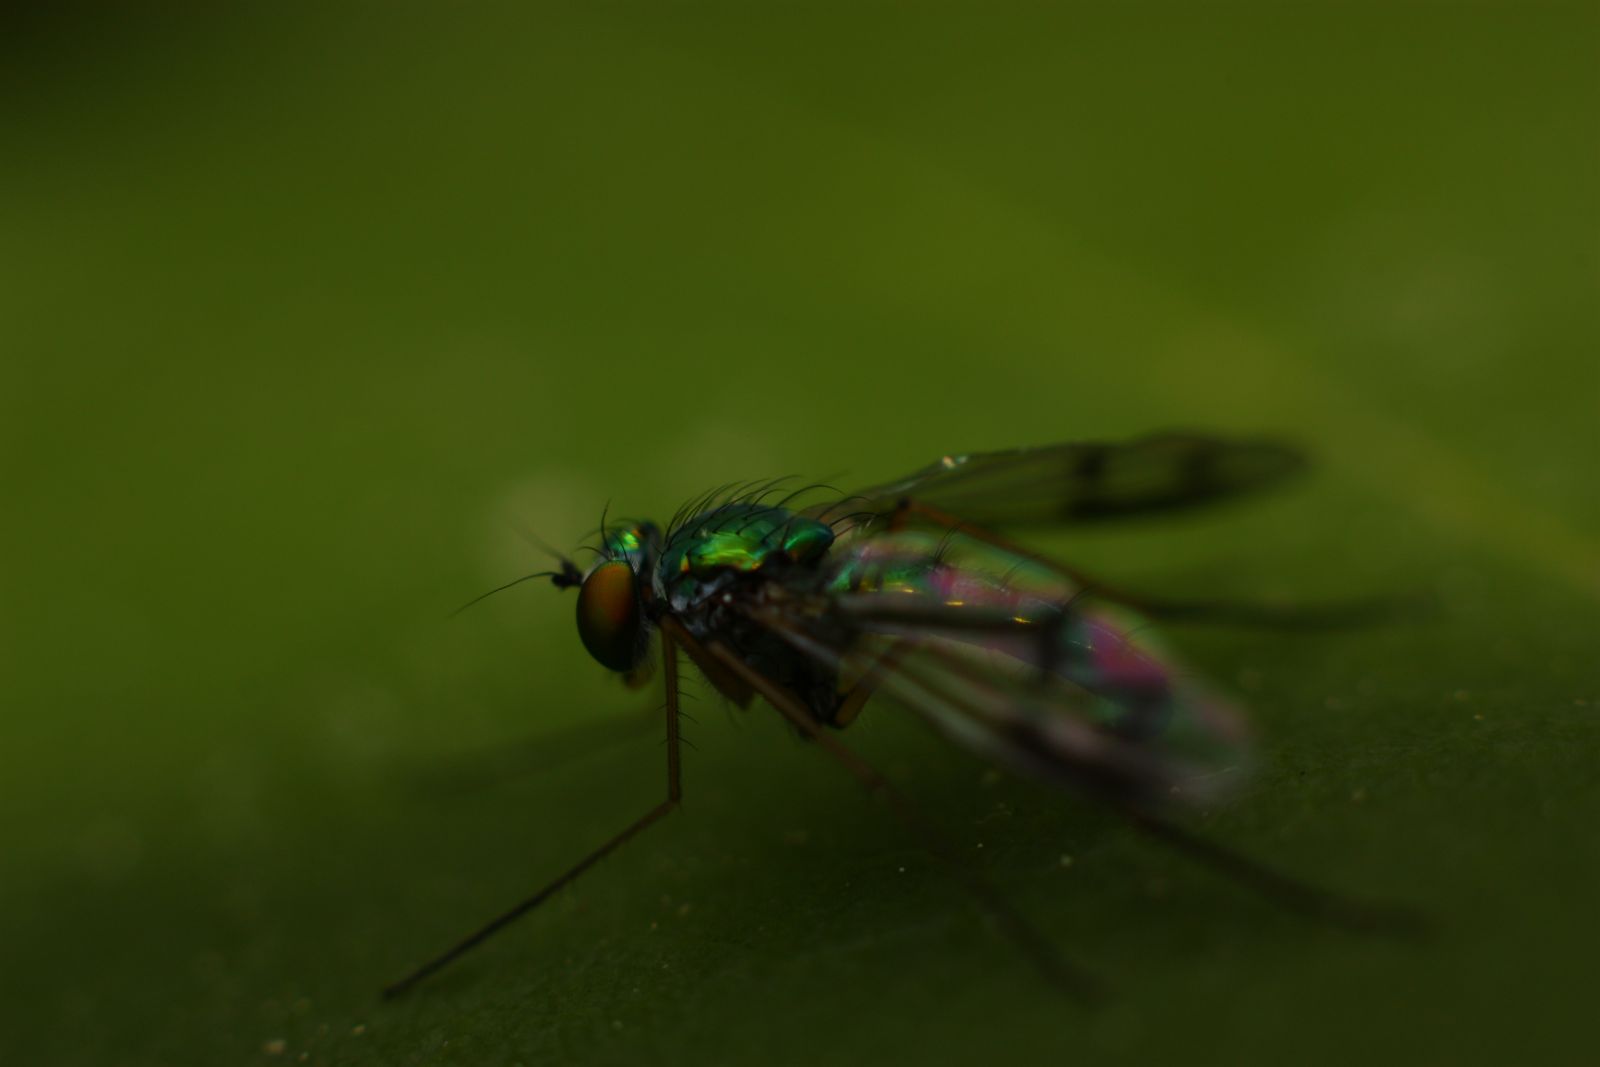 A metallic green fly